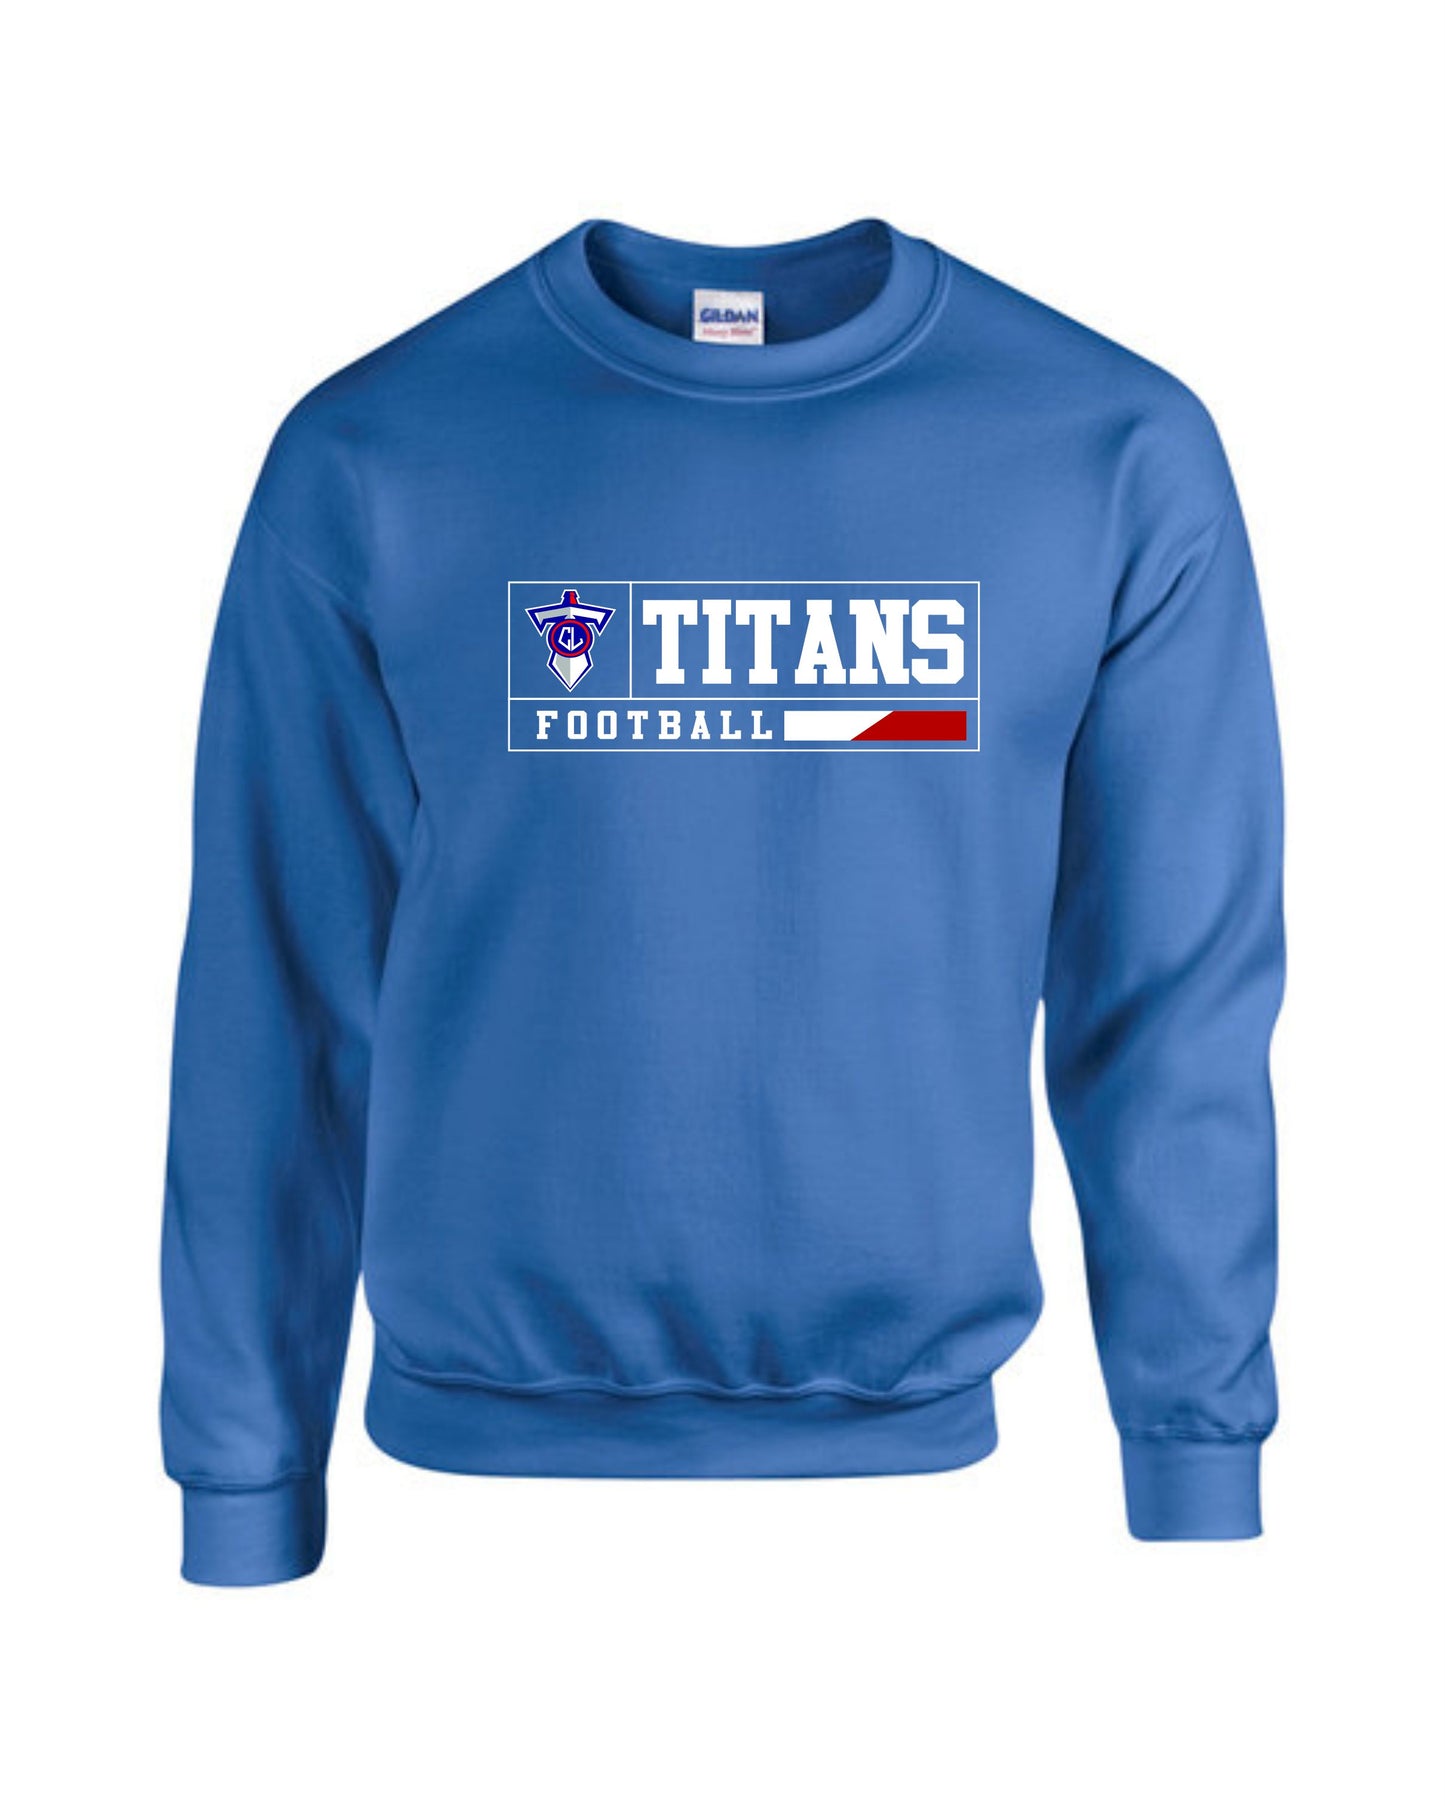 Titans Football Line - Outerwear